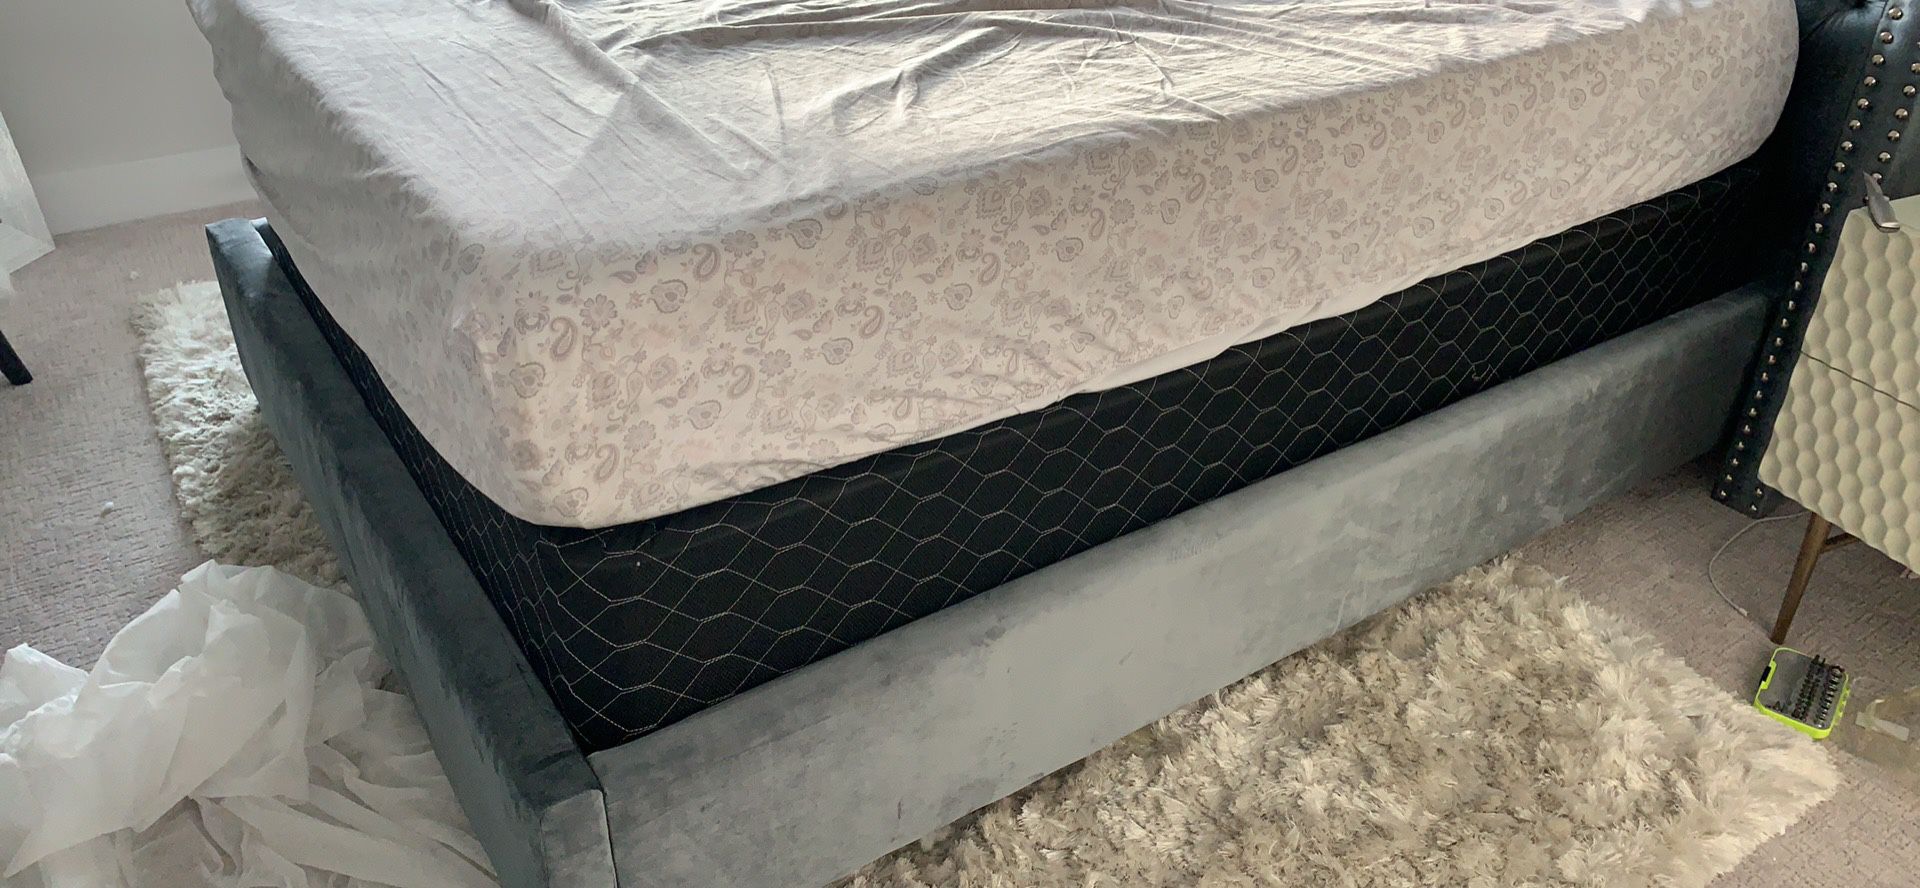 Full bed box spring